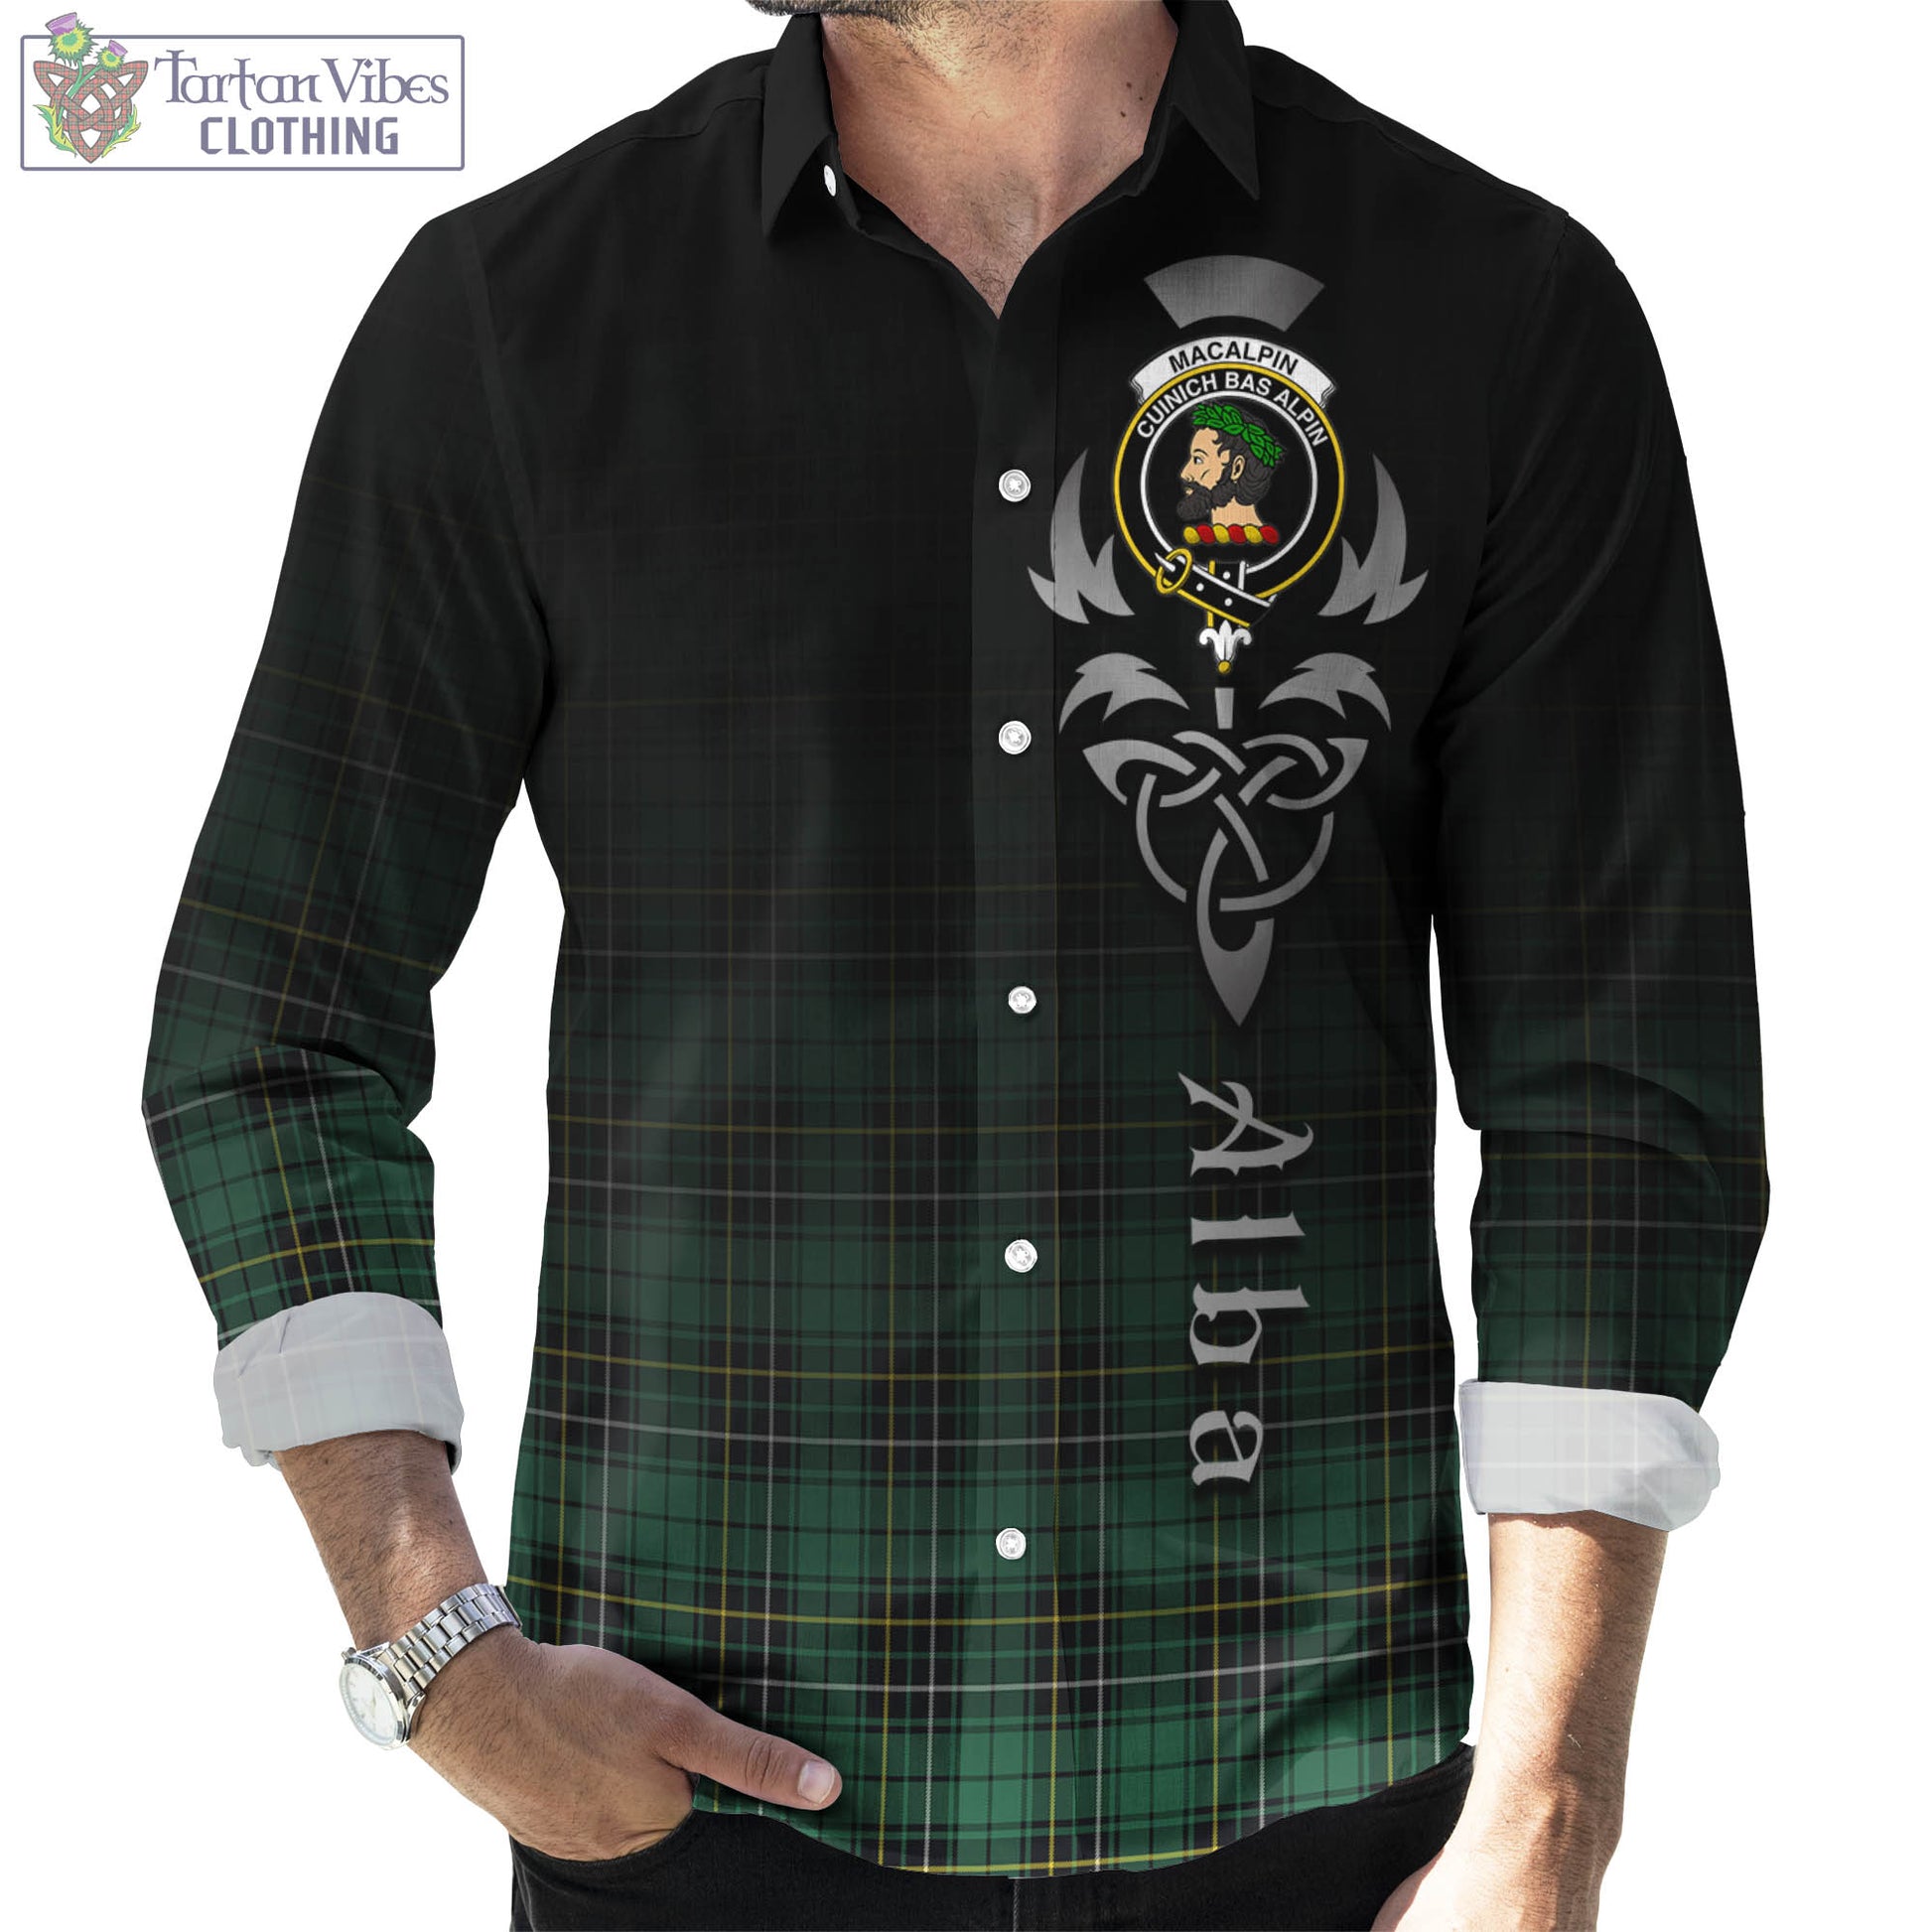 Tartan Vibes Clothing MacAlpin Ancient Tartan Long Sleeve Button Up Featuring Alba Gu Brath Family Crest Celtic Inspired